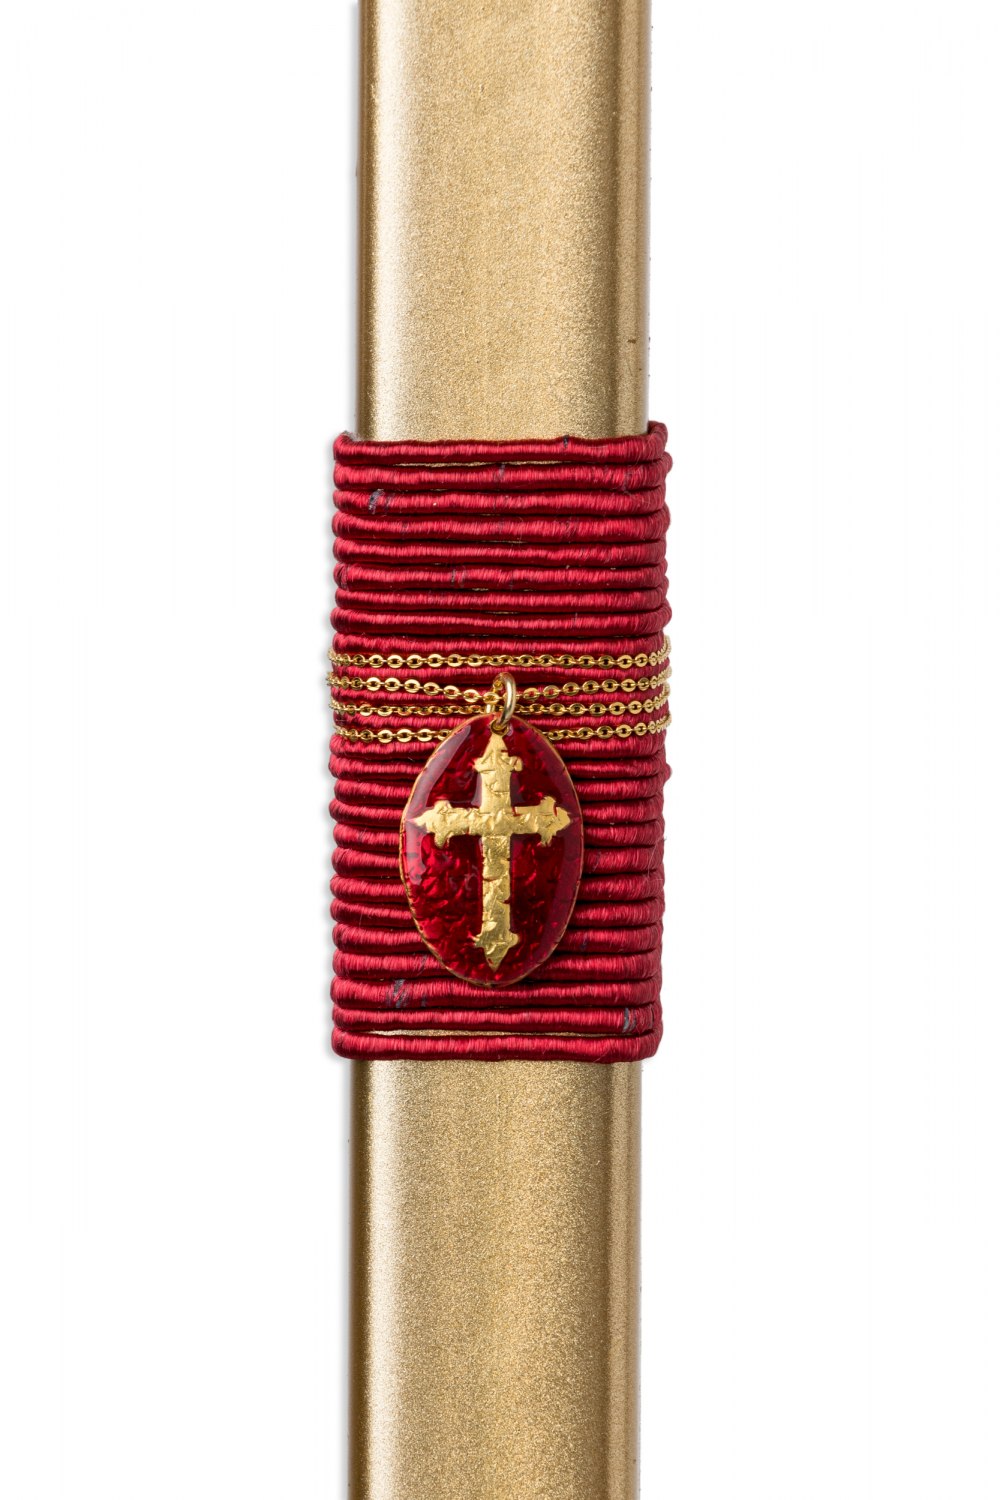 KESSARIS - Textured Cross Handmade Easter Gold Candle